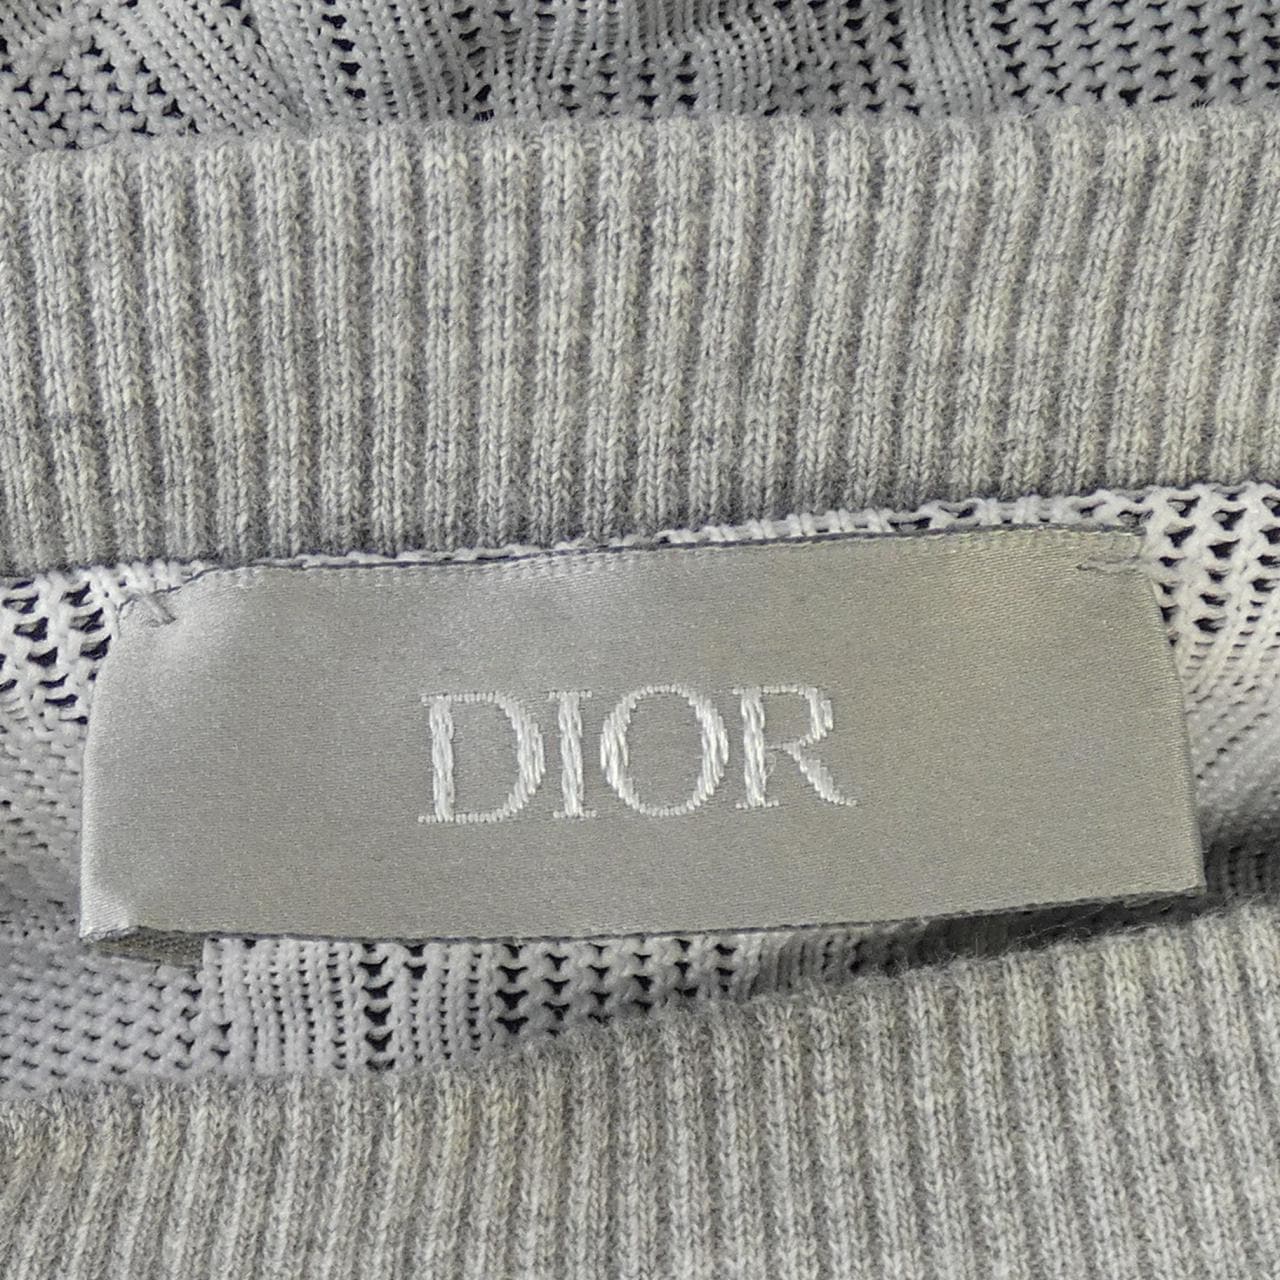 DIOR Dior (star in the constellation Orion) PARKER